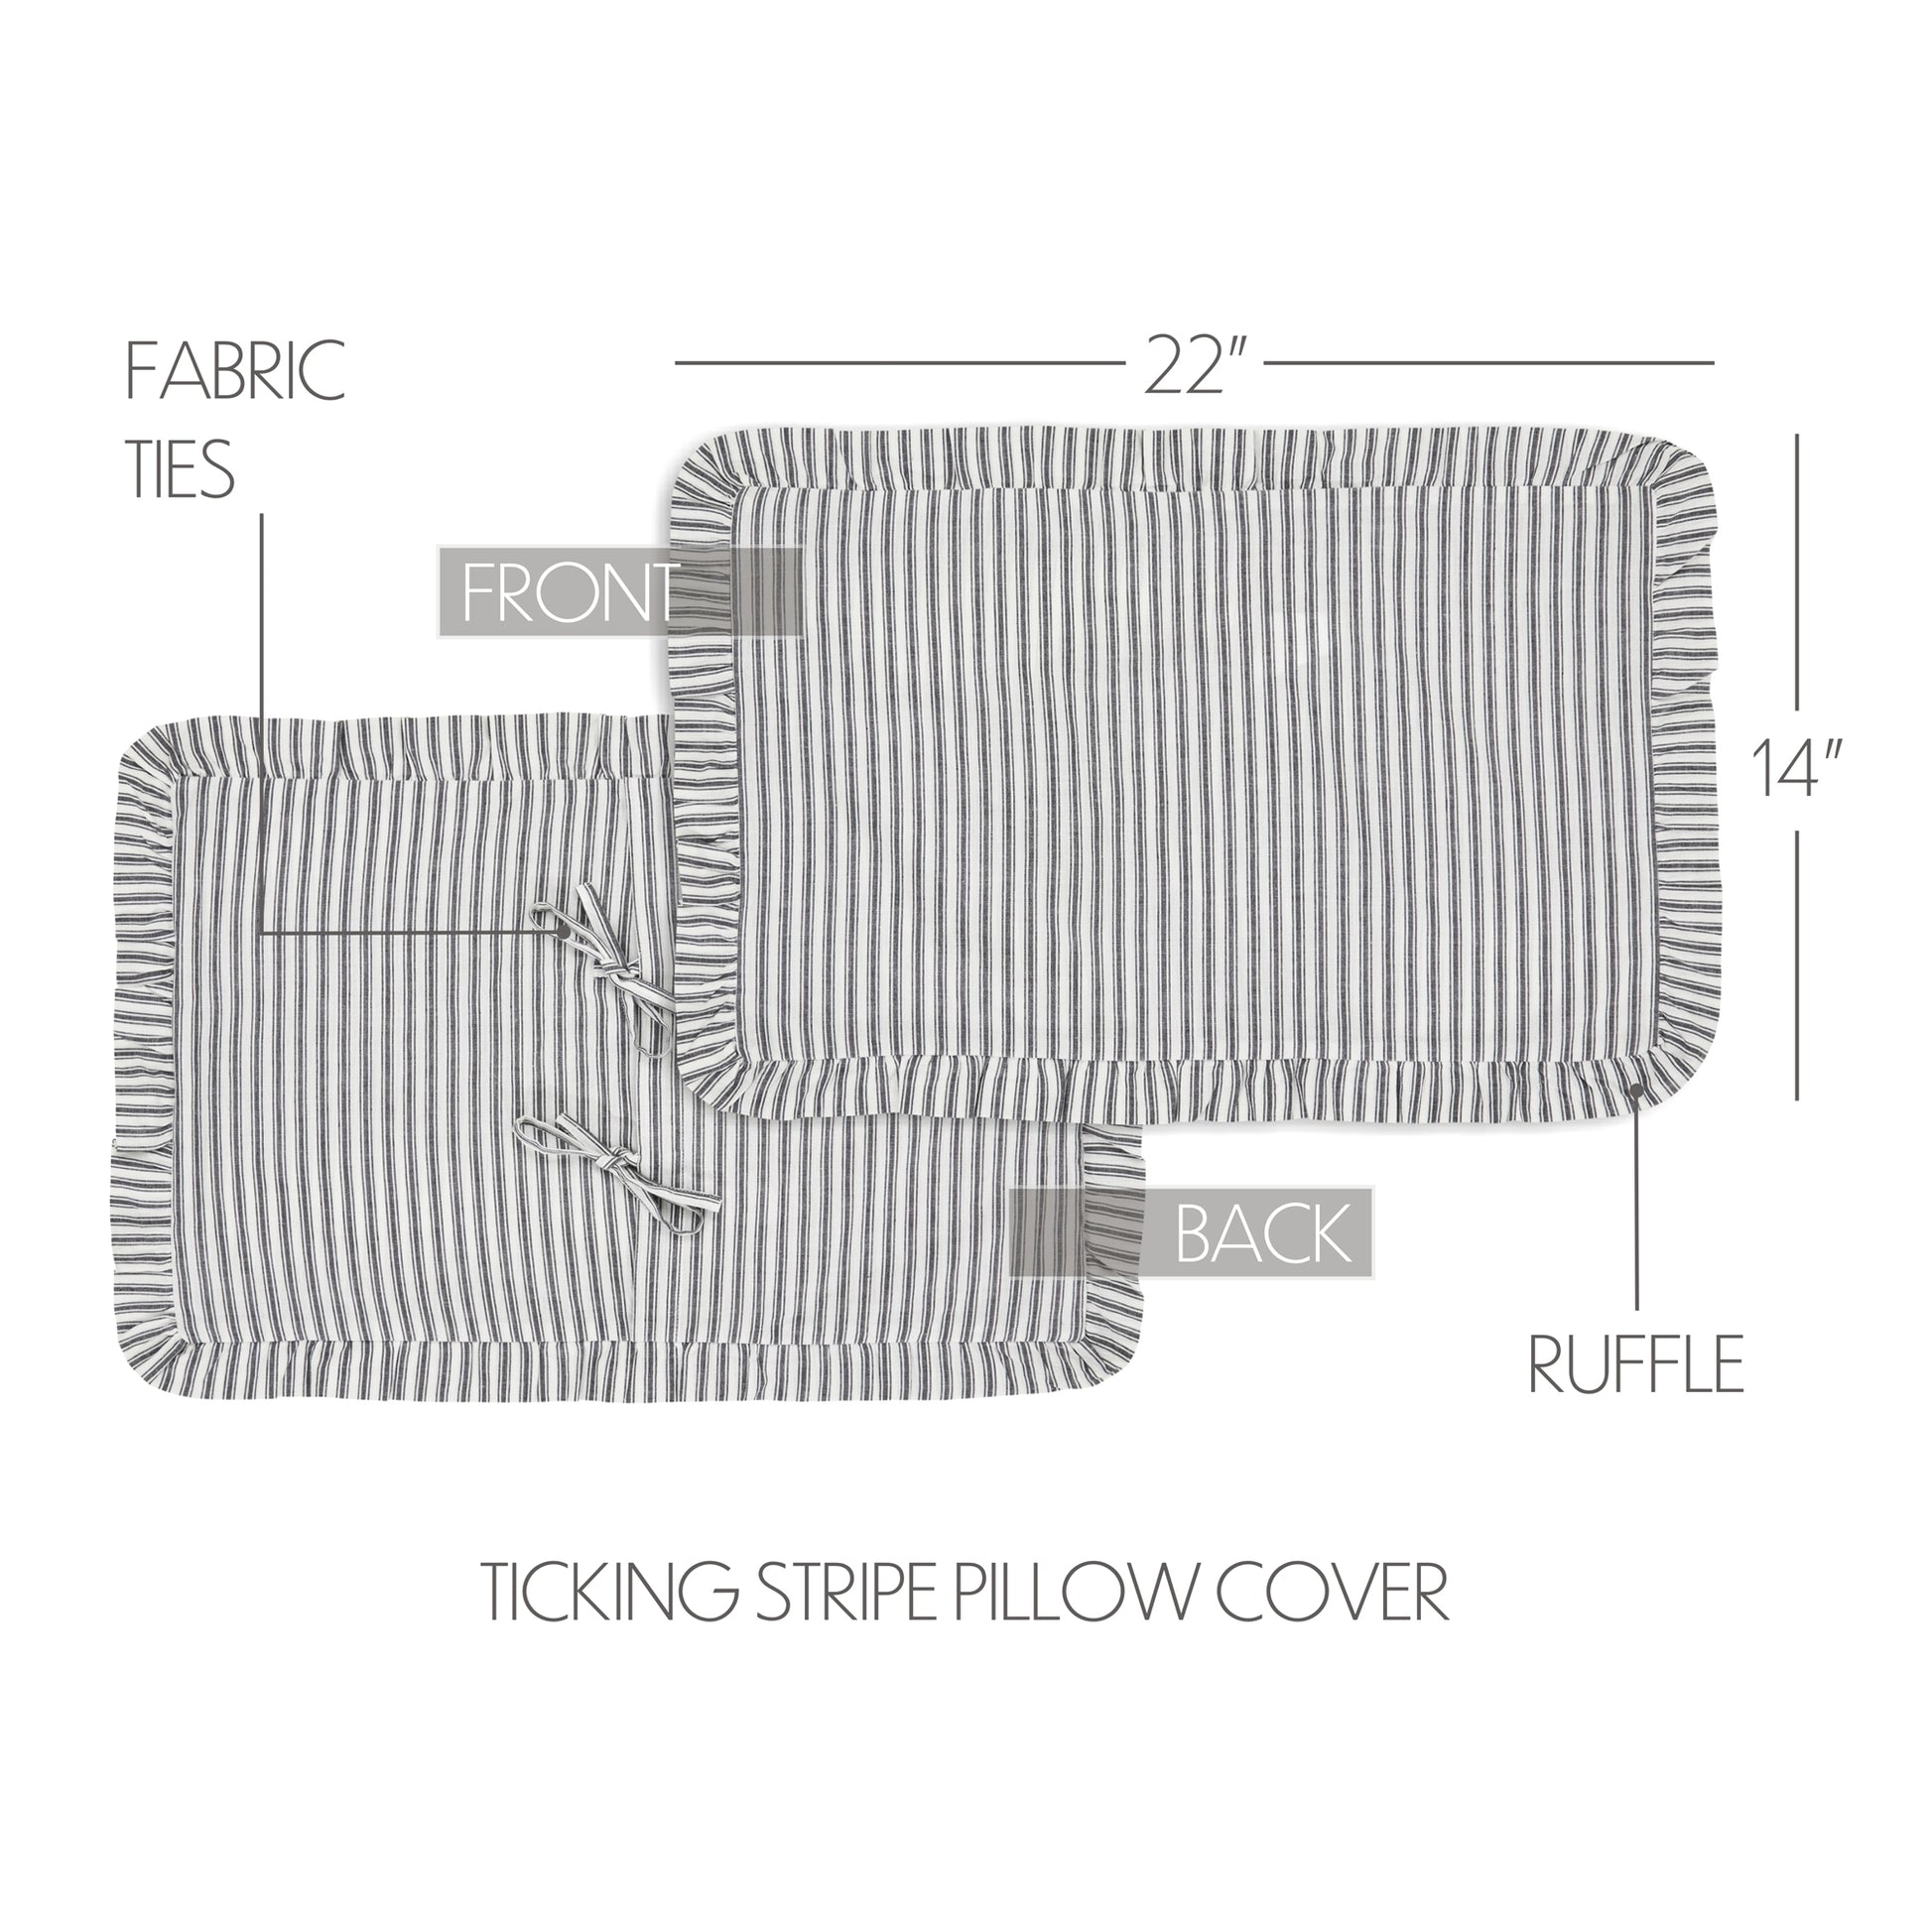 80460-Sawyer-Mill-Black-Ruffled-Ticking-Stripe-Pillow-Cover-14x22-image-3